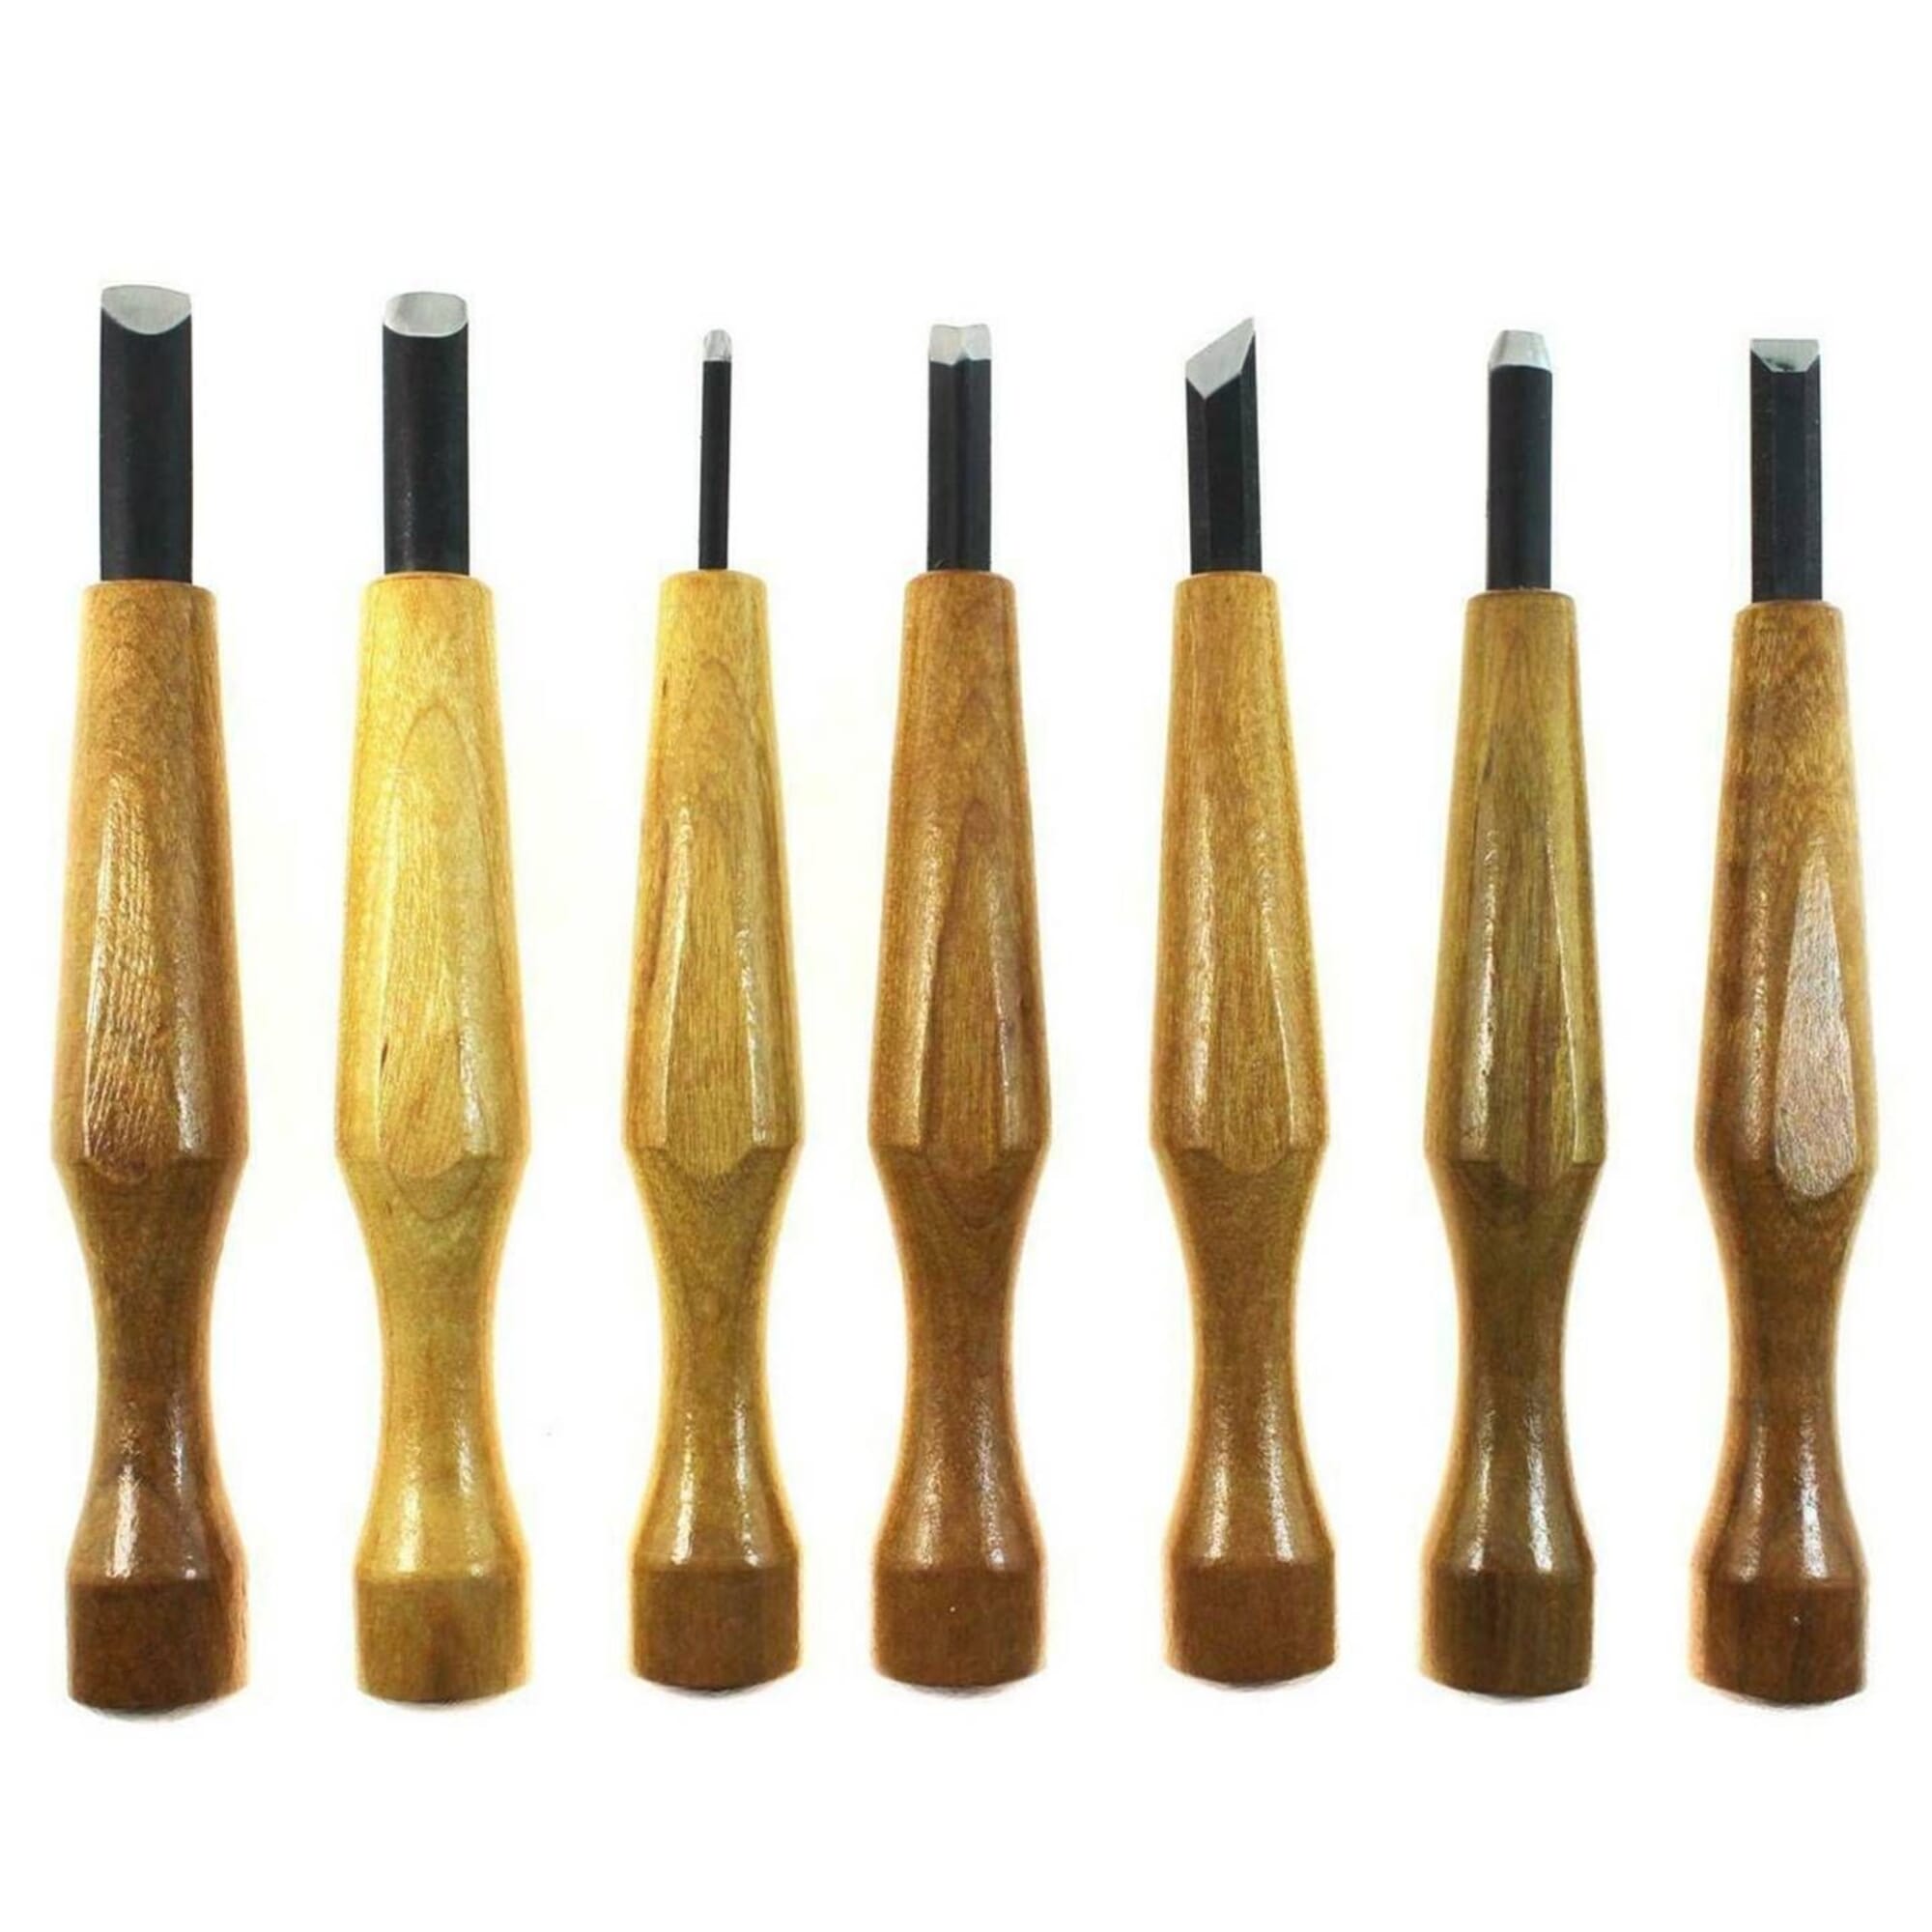 Wood Carving Tools - Lee Valley Tools